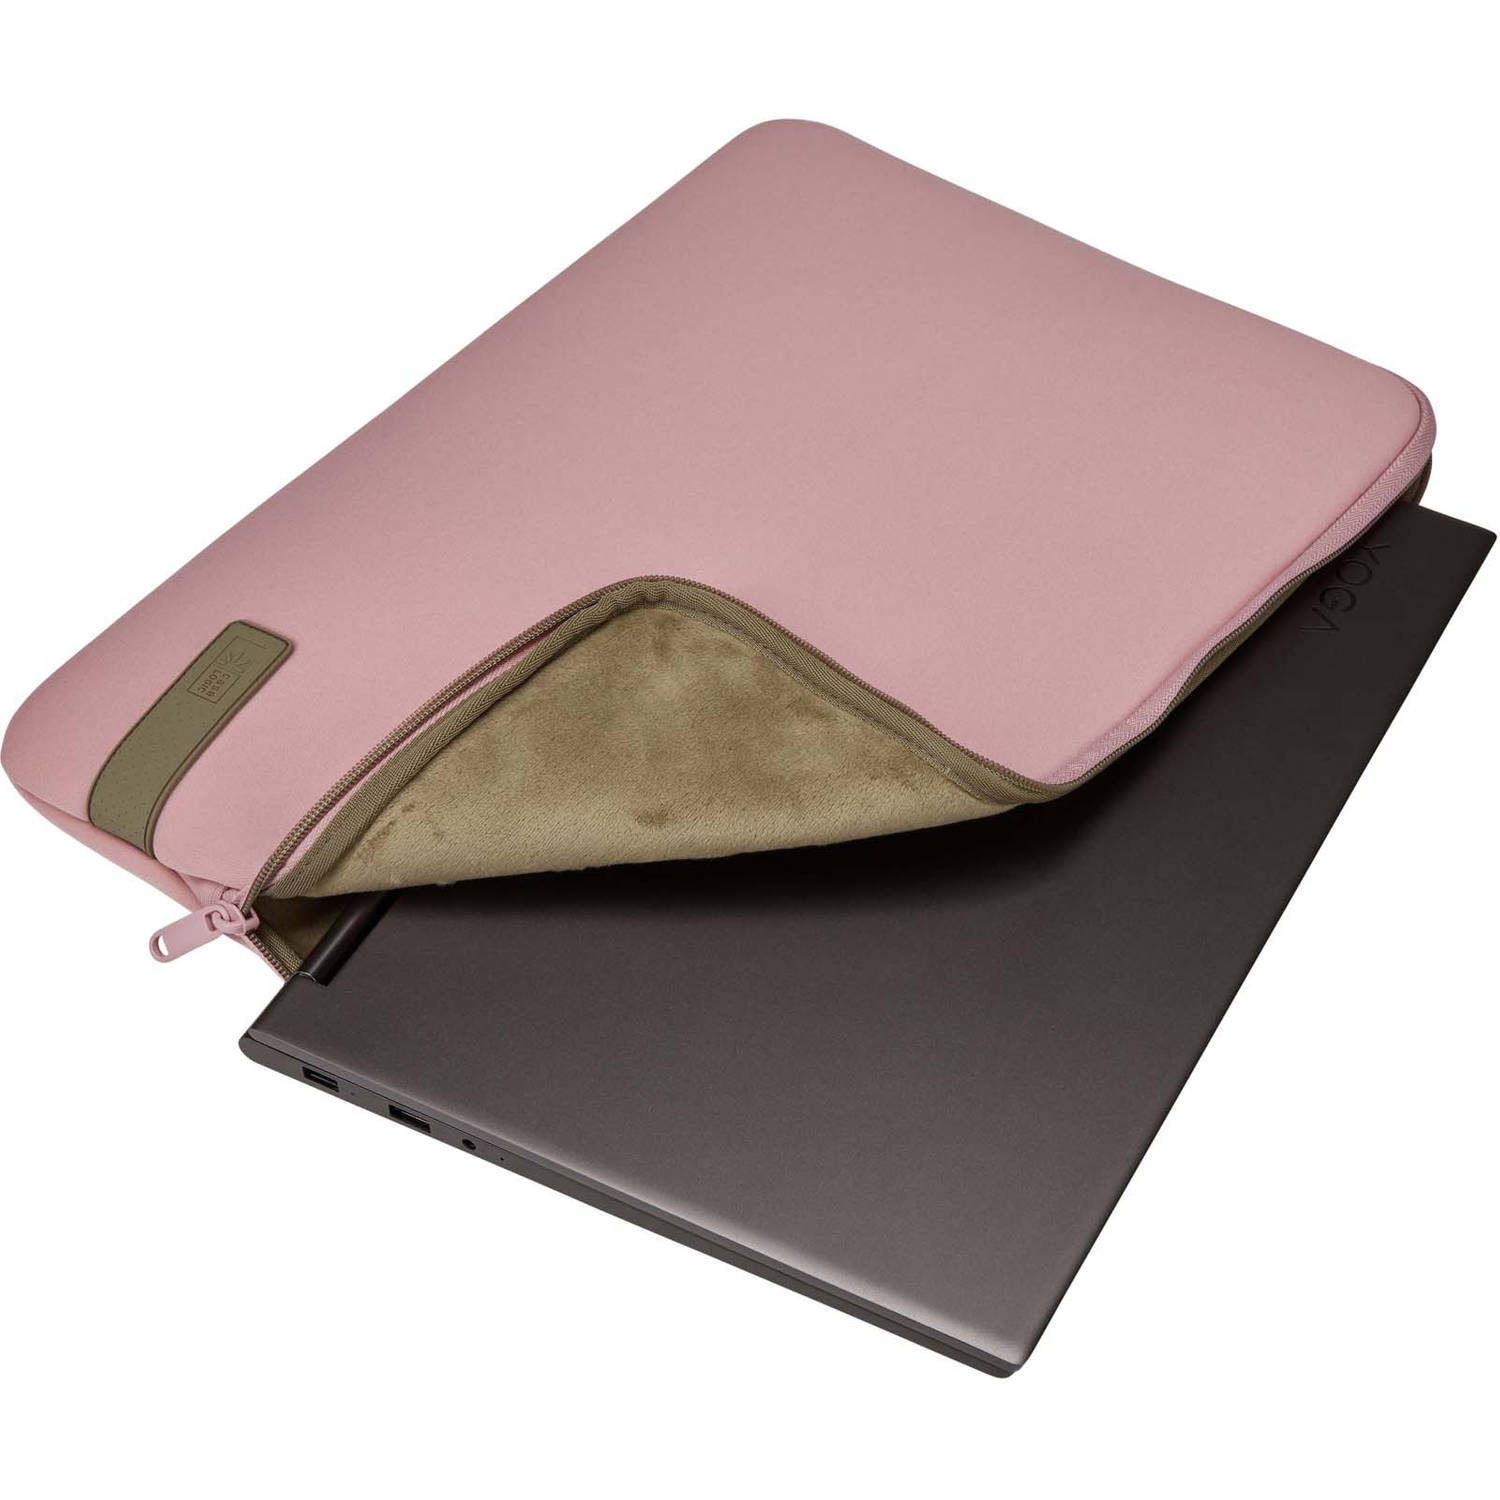 Case laptop sleeve Reflect 15.6 inch (Roze) | Blokker